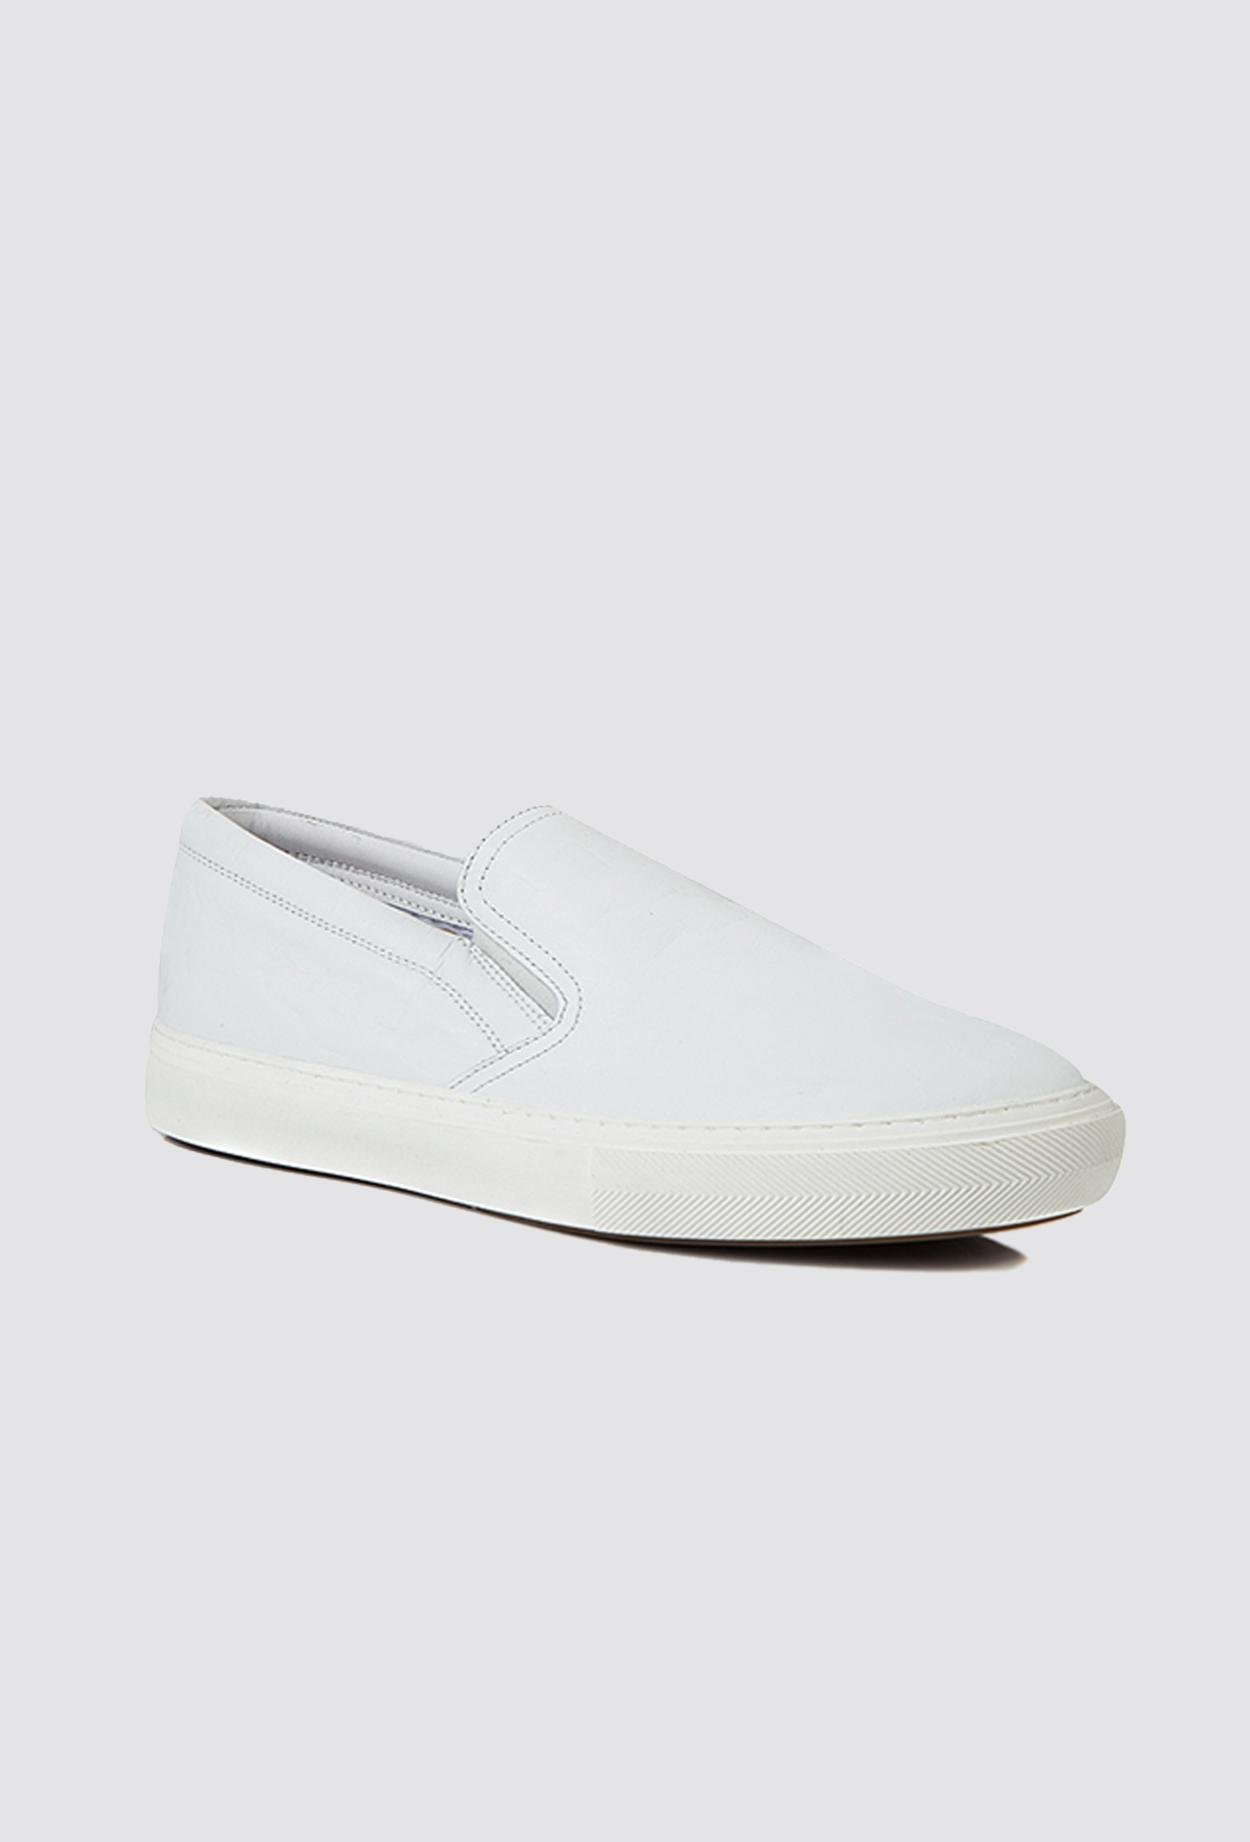 Twn Beyaz Sneaker Ayakkabi